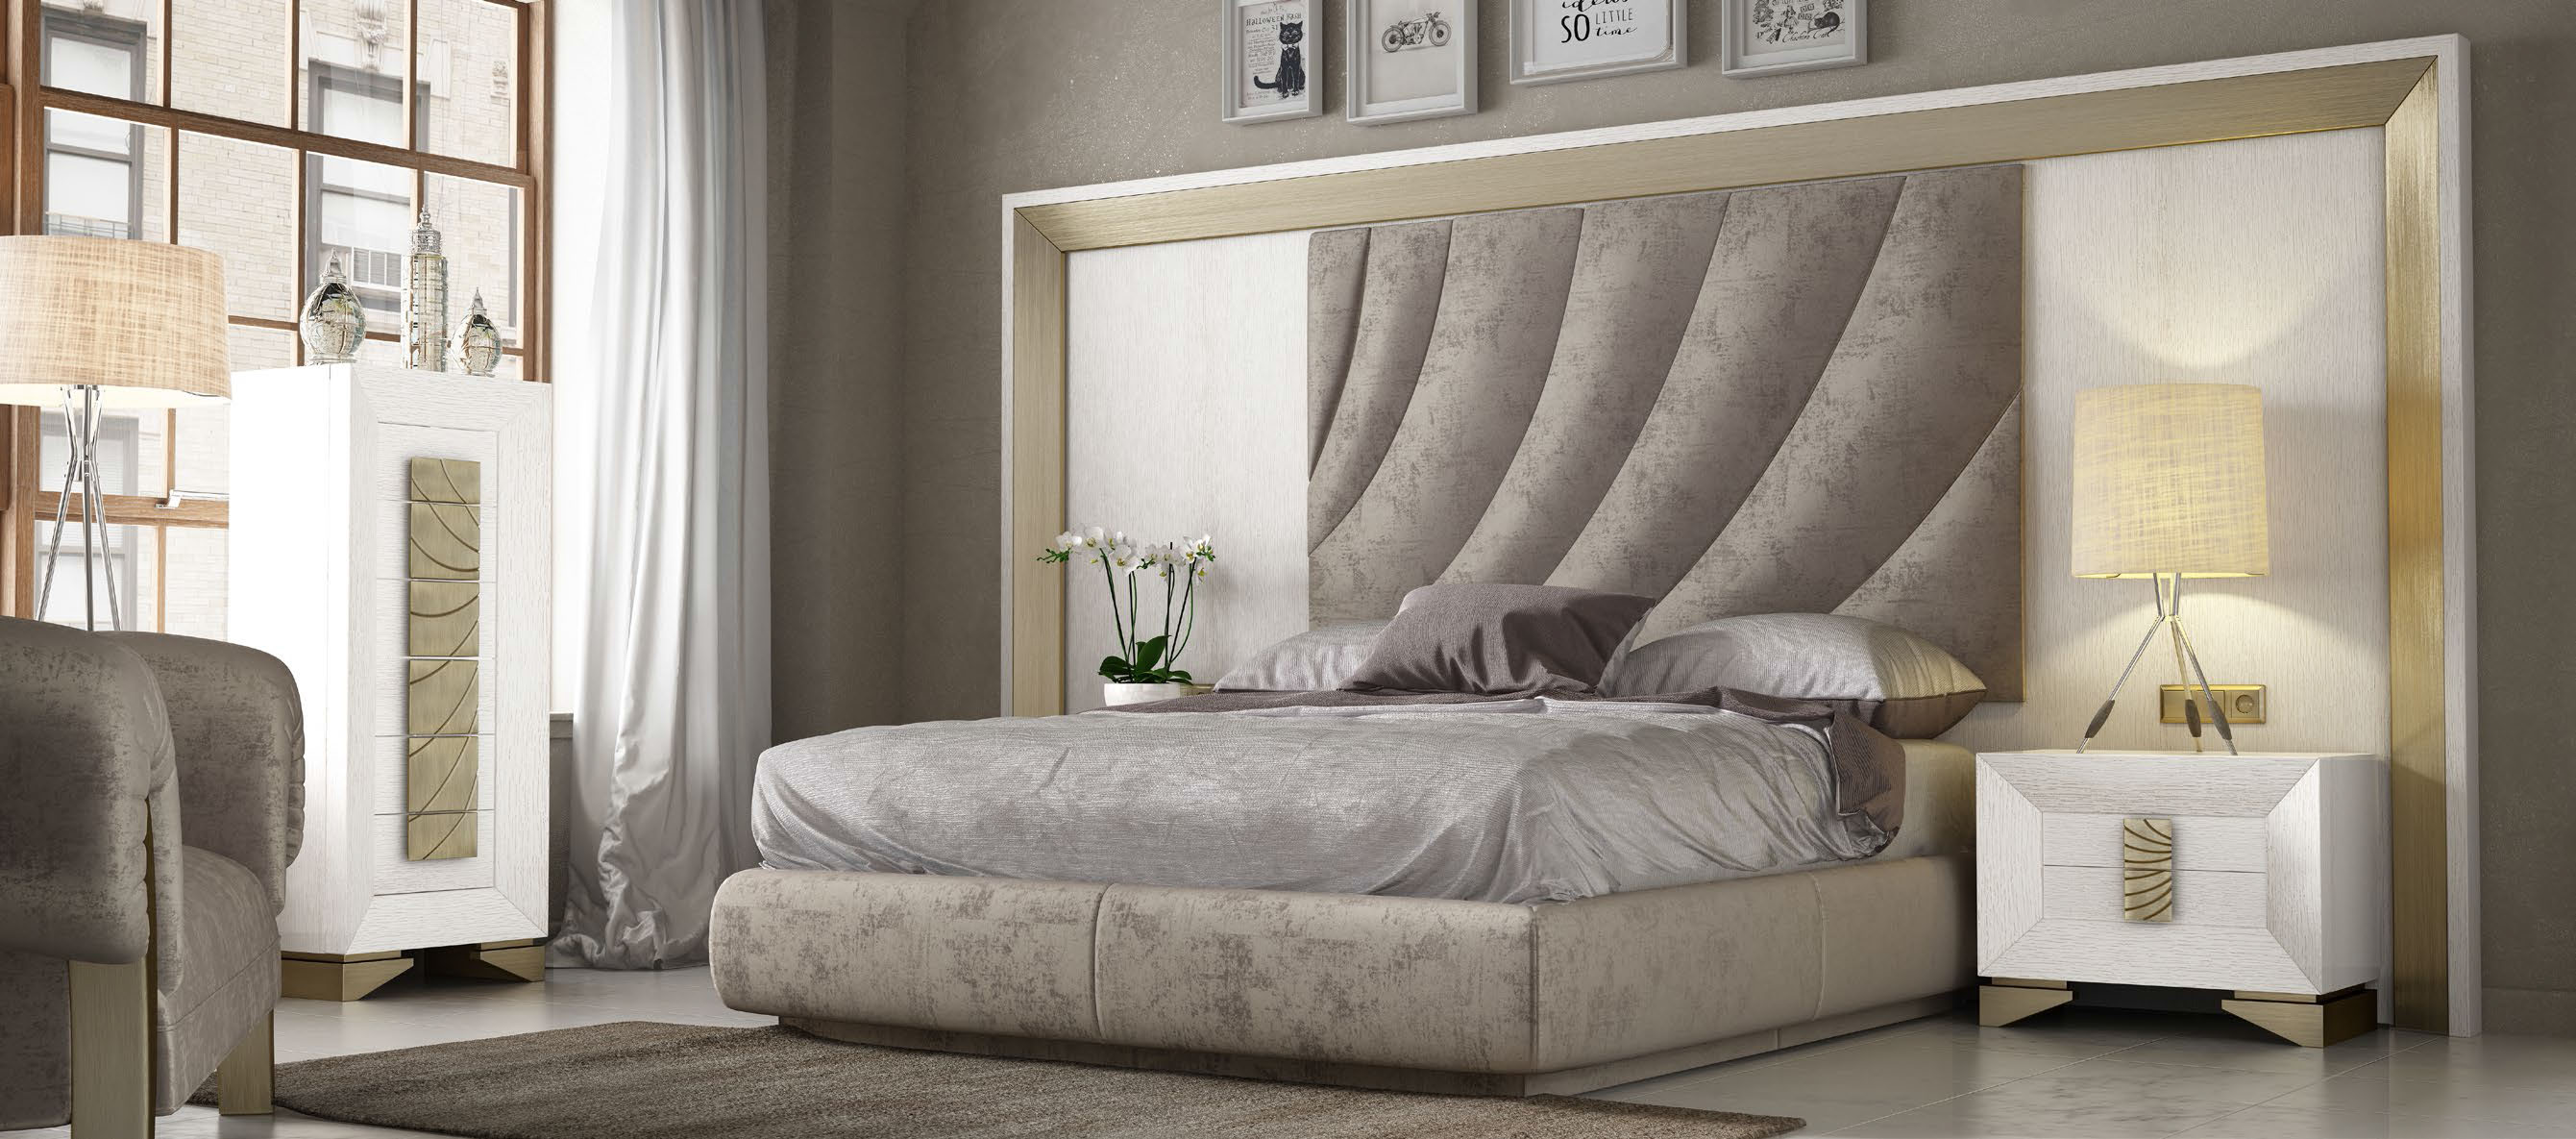 Brands Franco Furniture Bedrooms vol3, Spain DOR 128